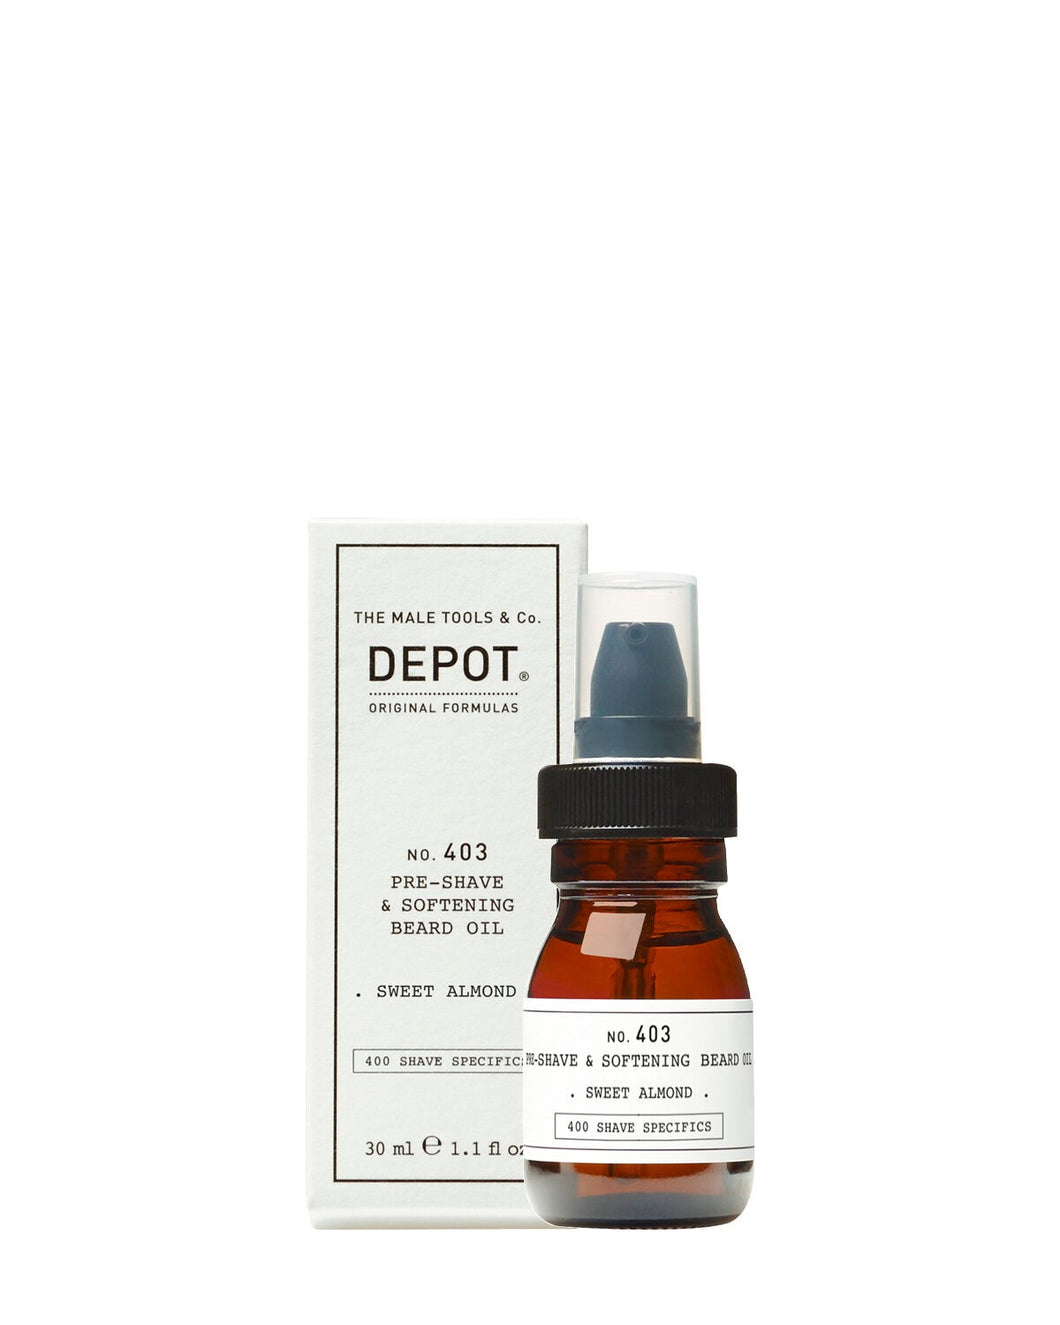 Depot- Pre-Shave & Softening Beard Oil 403